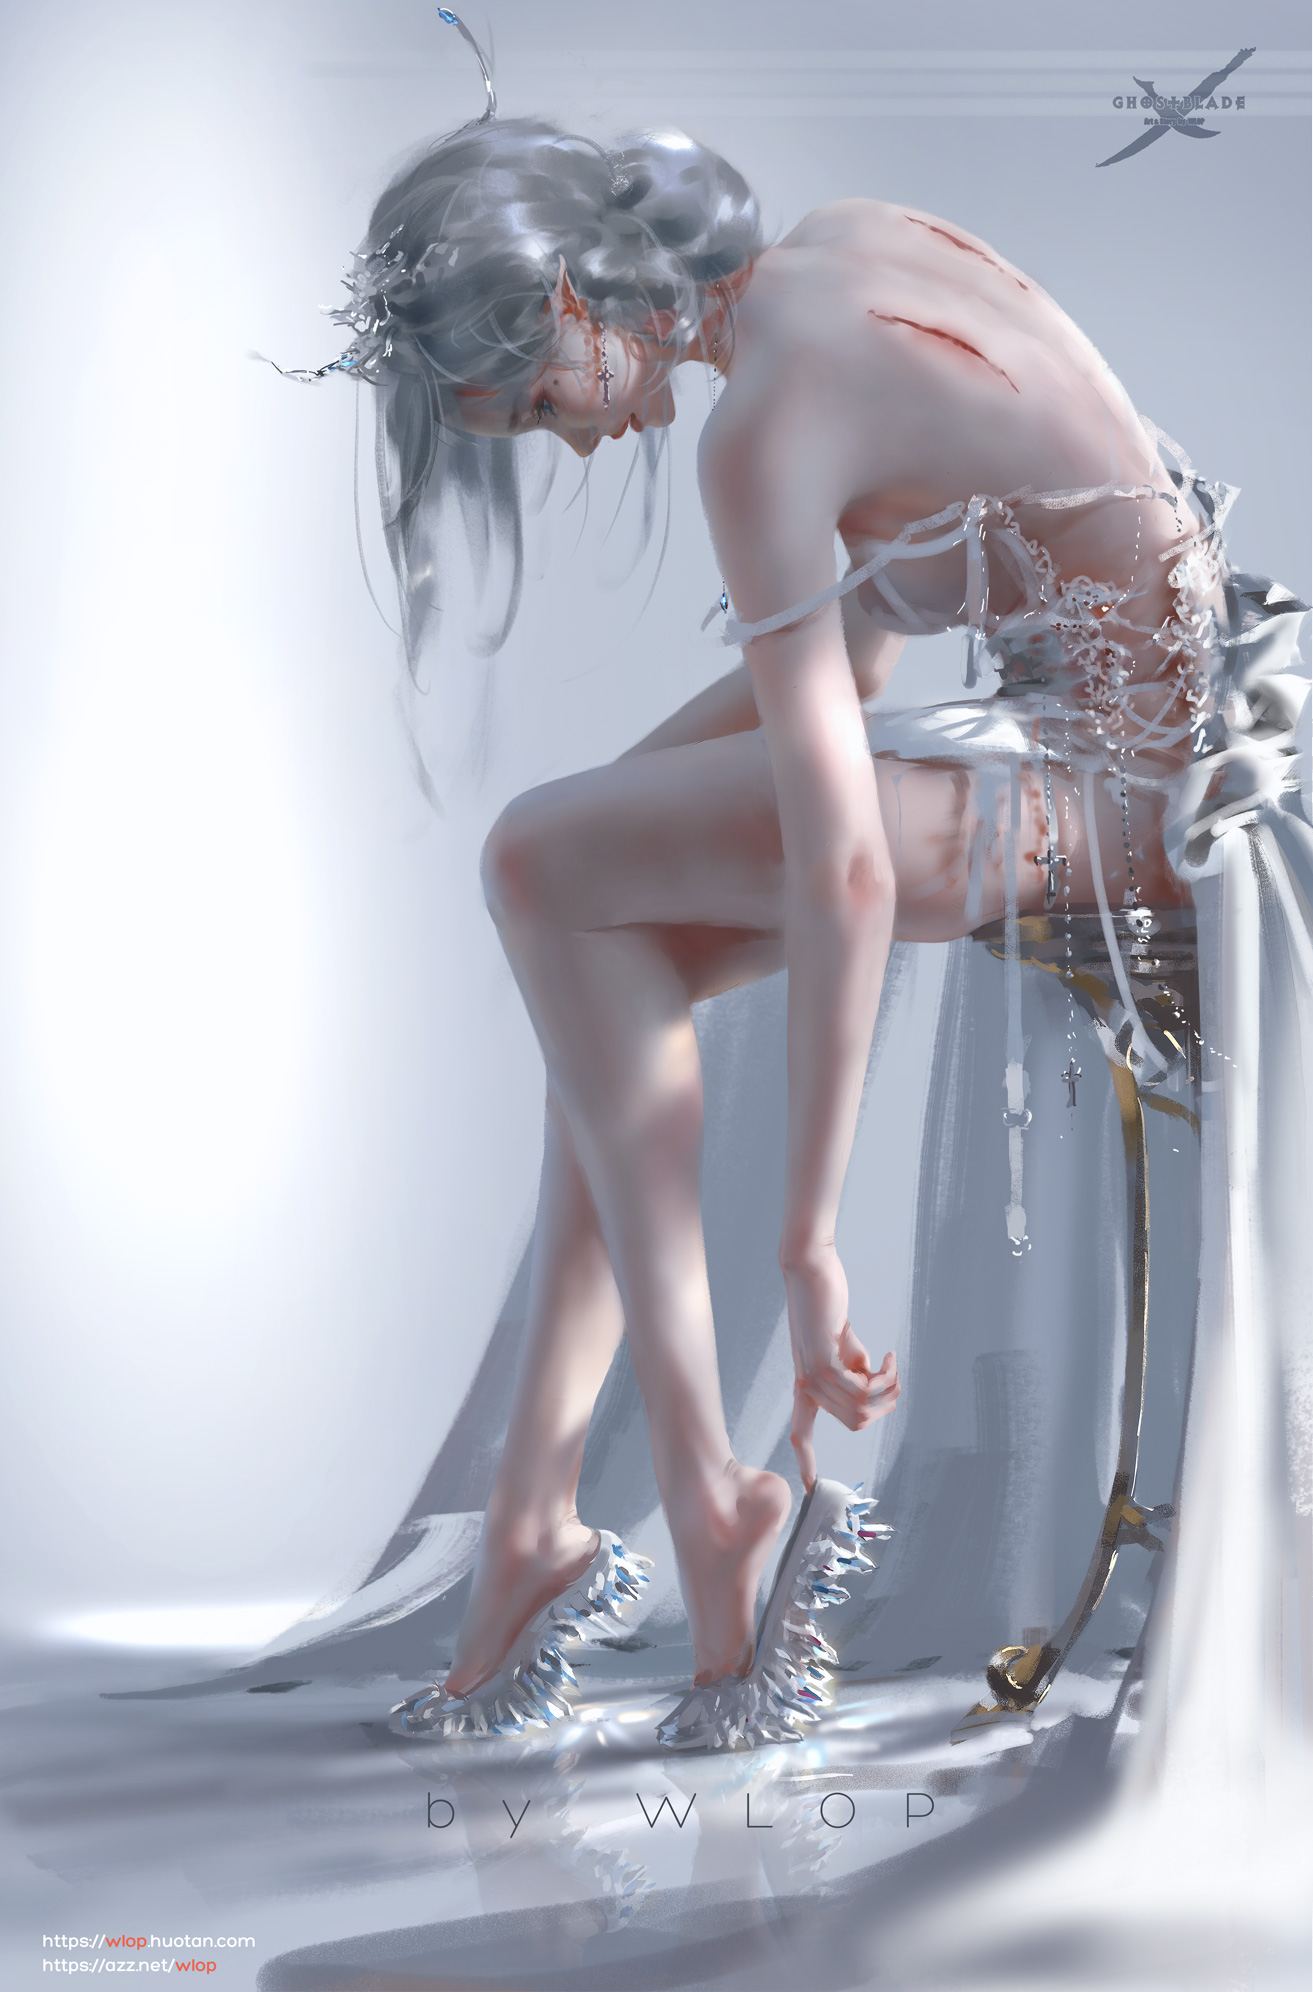 General 1313x1992 scars pointy ears Ghostblade fantasy girl fantasy art bareback dress fallen angel WLOP